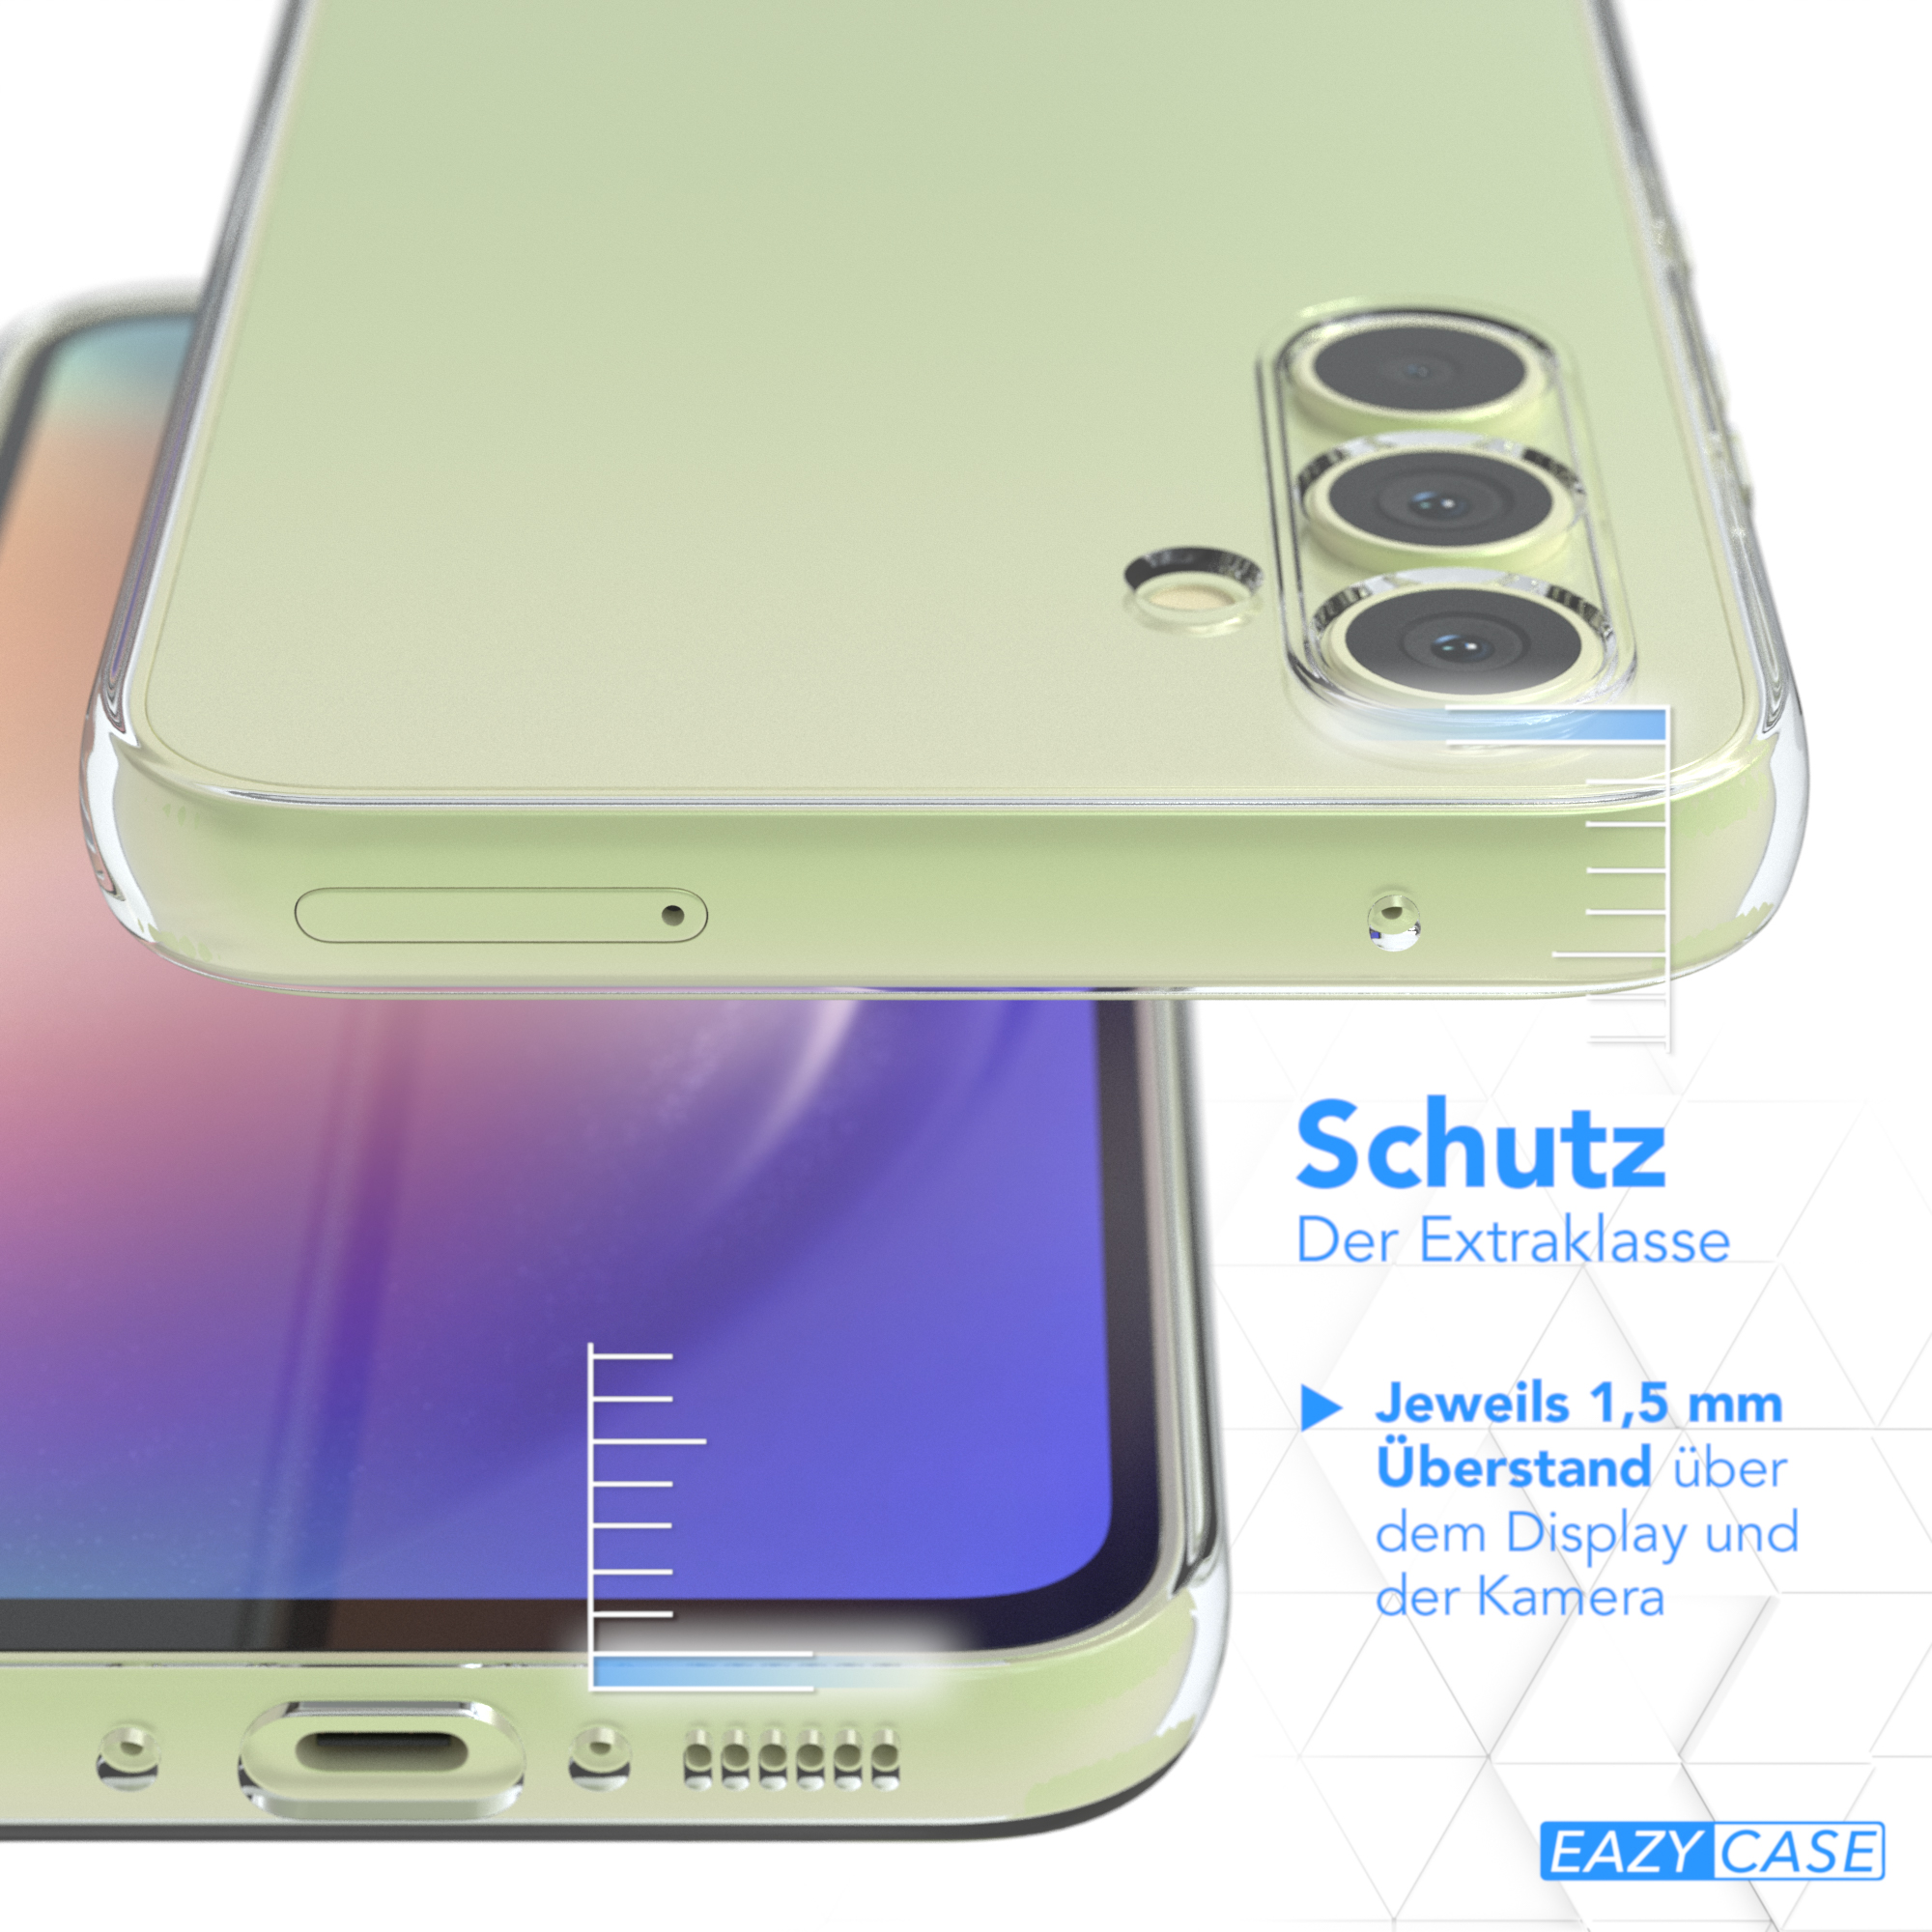 Galaxy Slimcover Clear, Samsung, CASE Backcover, Durchsichtig A54, EAZY